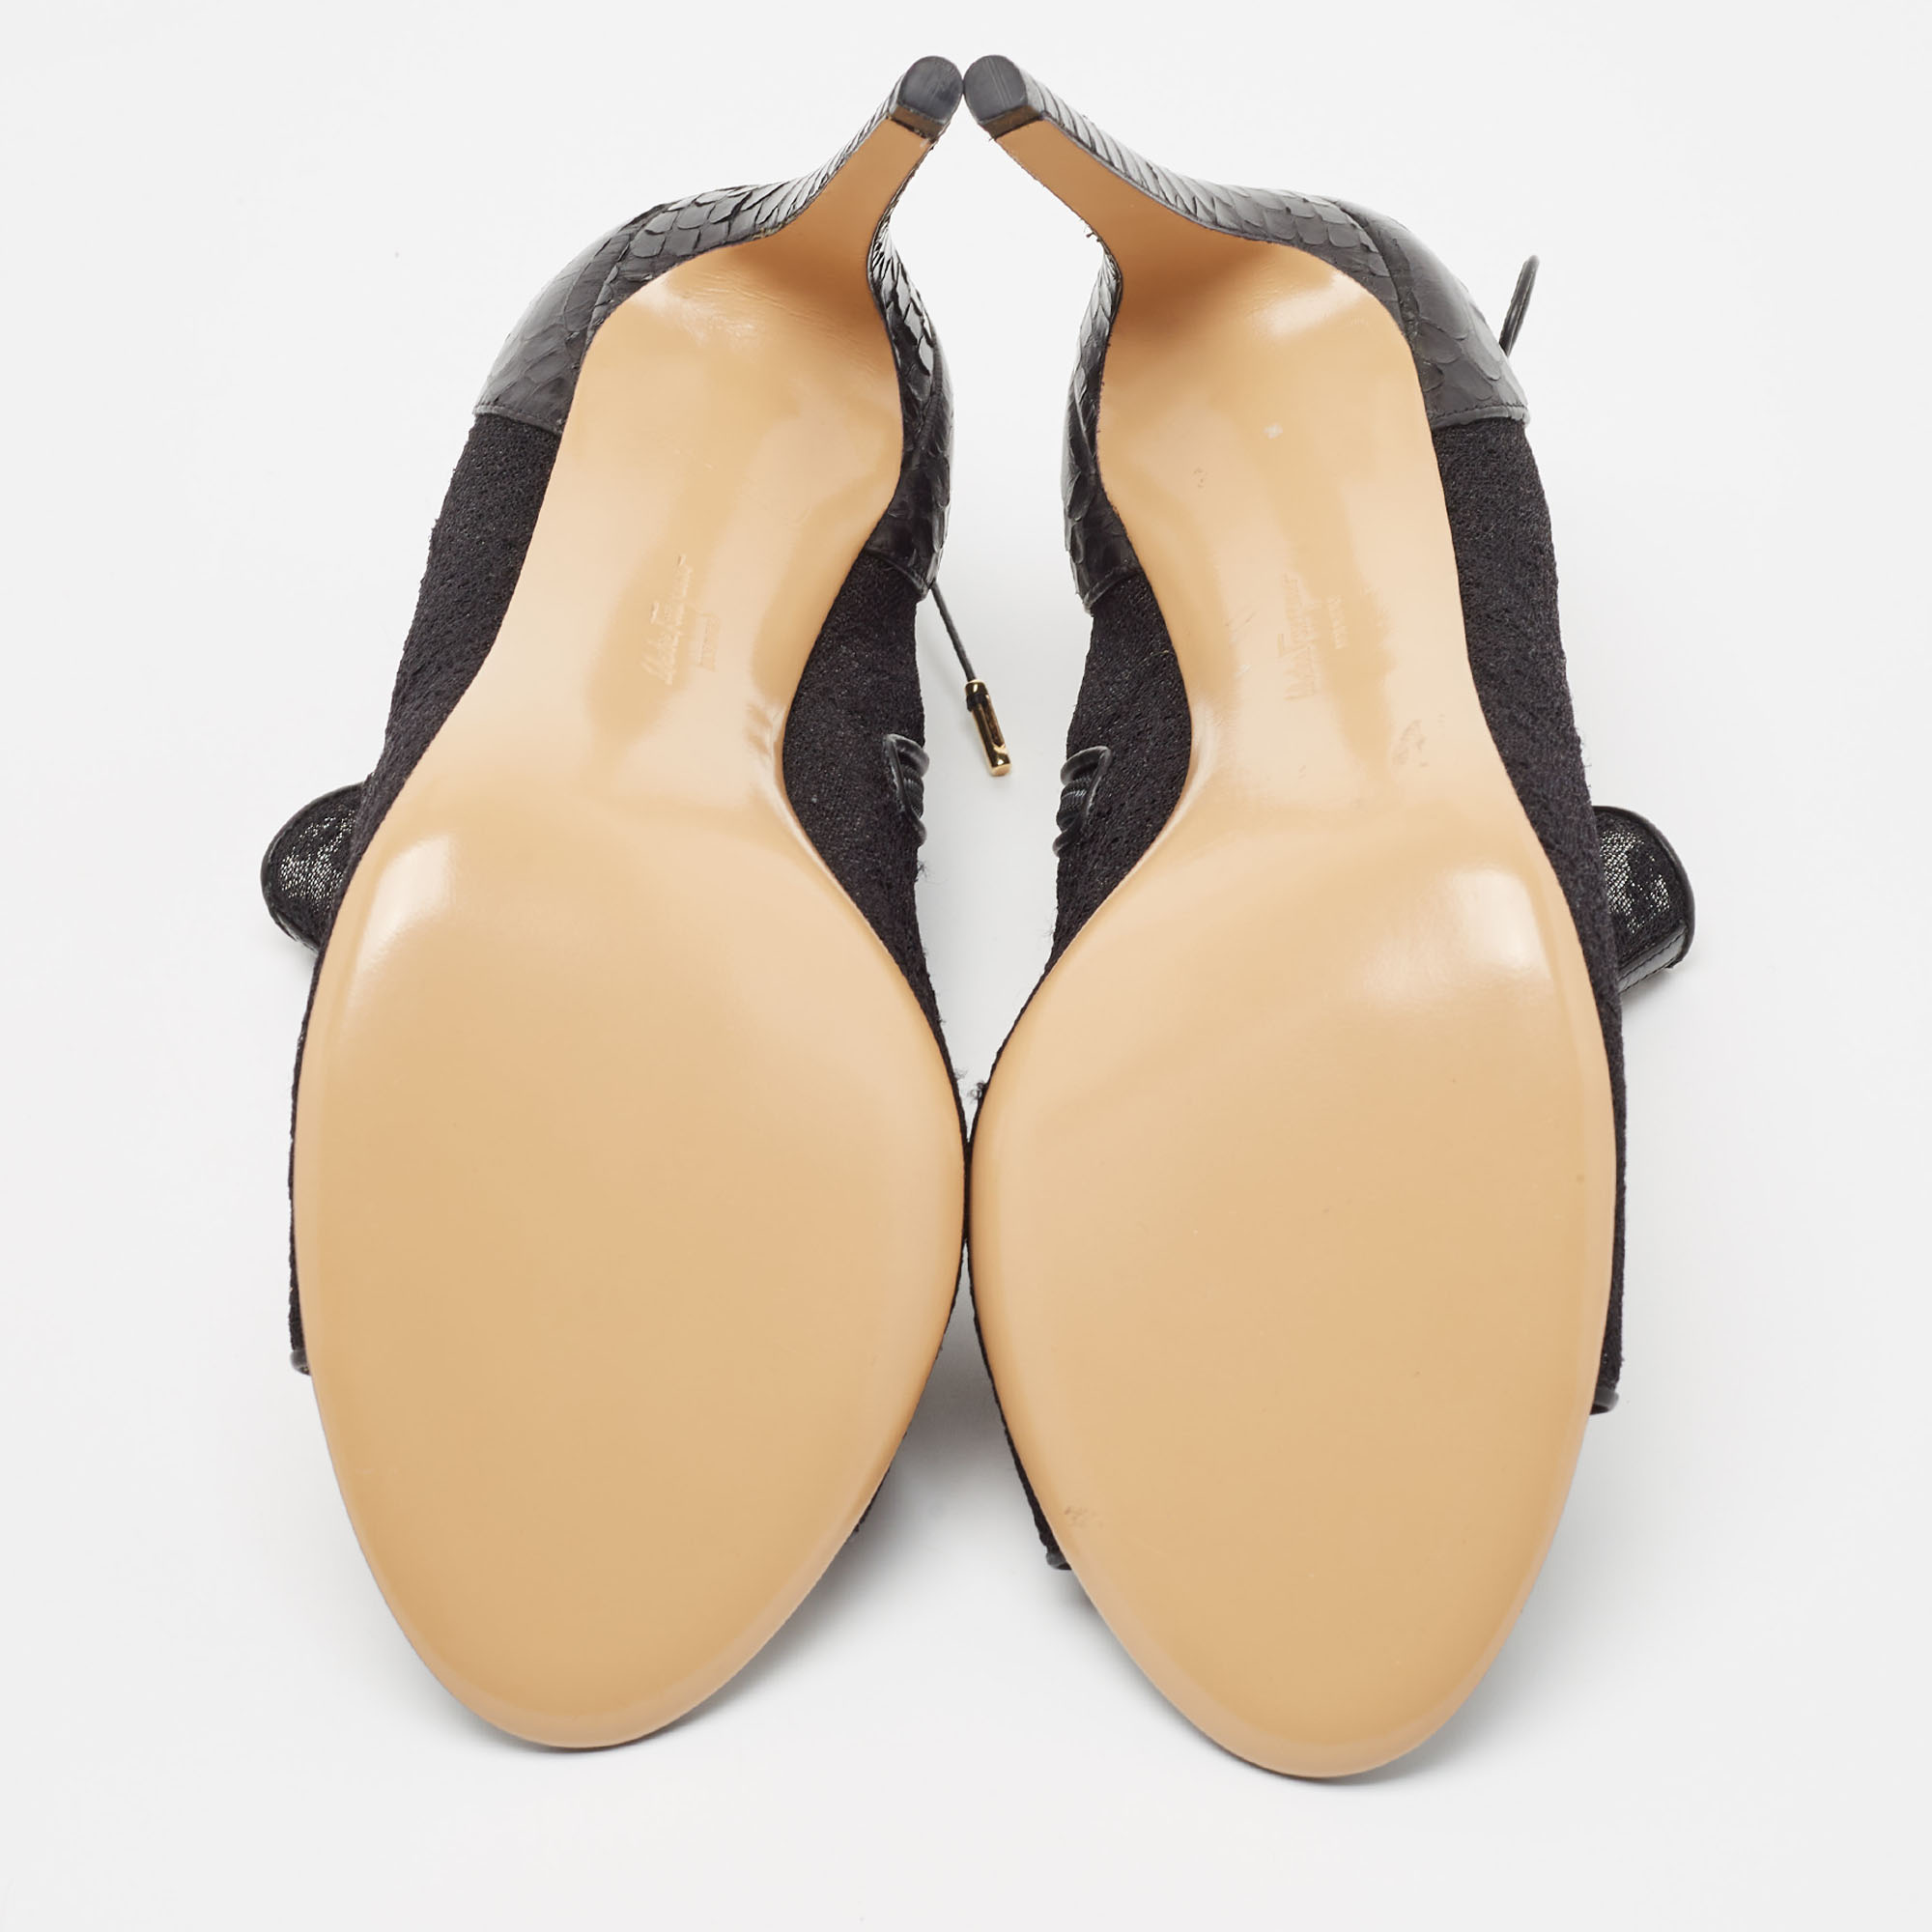 Salvatore Ferragamo Black Lace And Python Peep Toe Ankle Boots Size 39.5